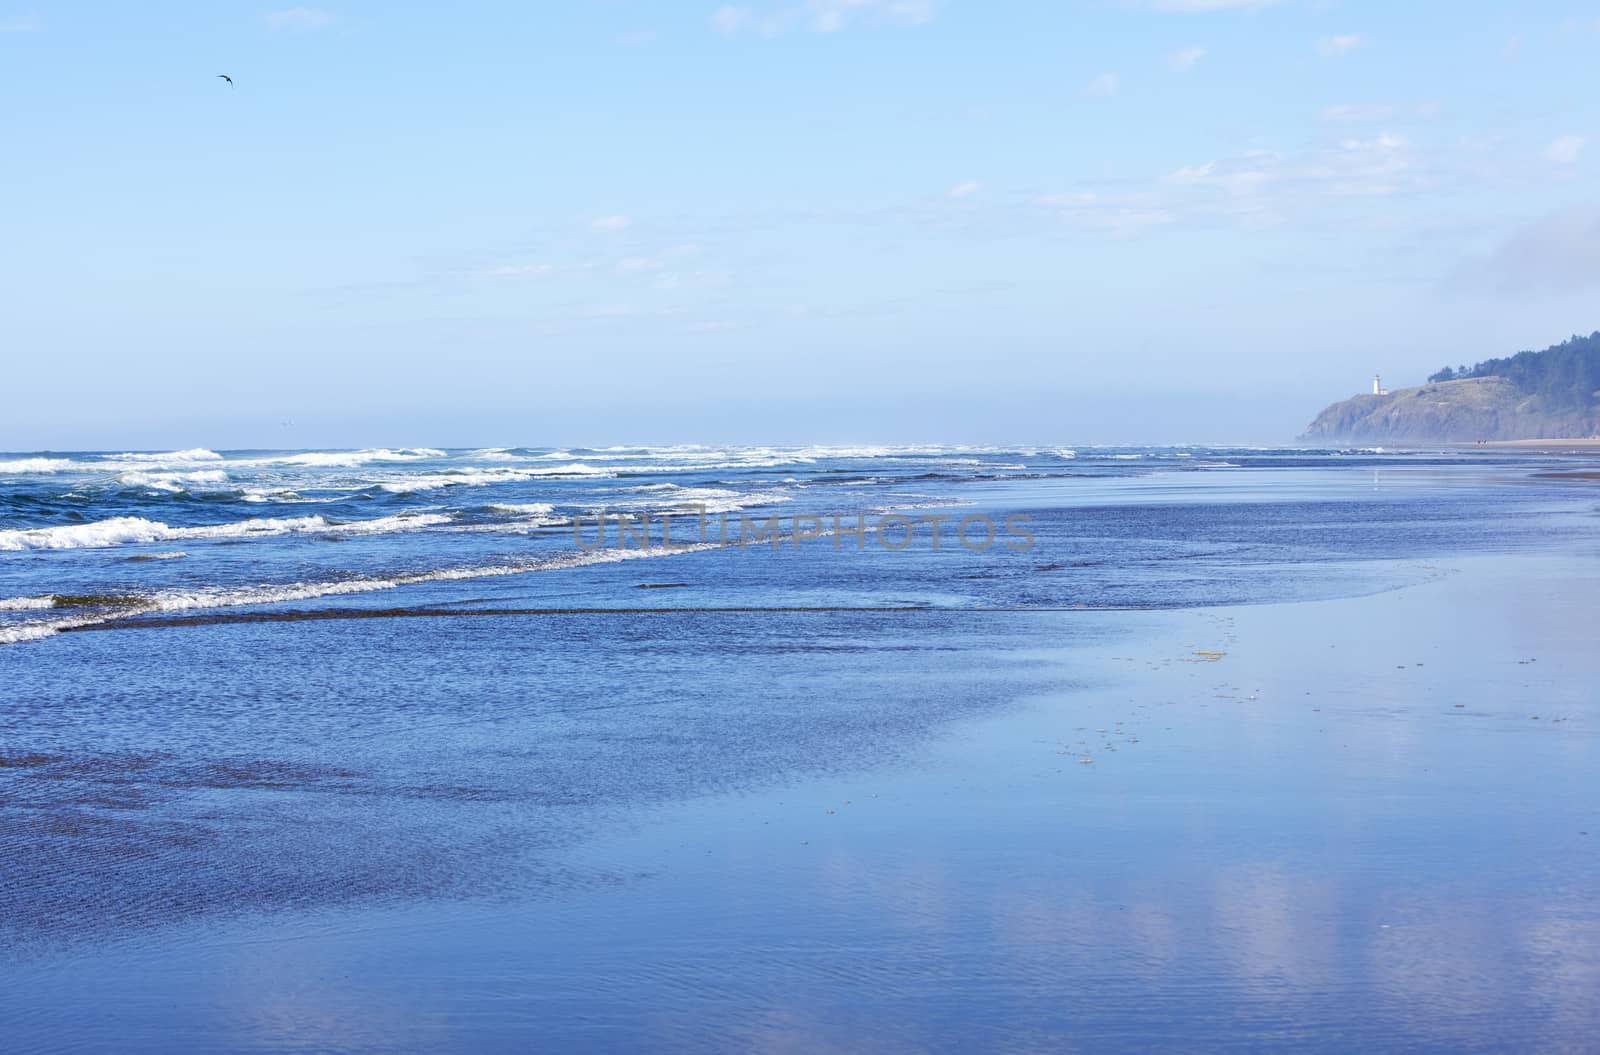 Oregon coastline, waves gently washing onto beach, blue skies